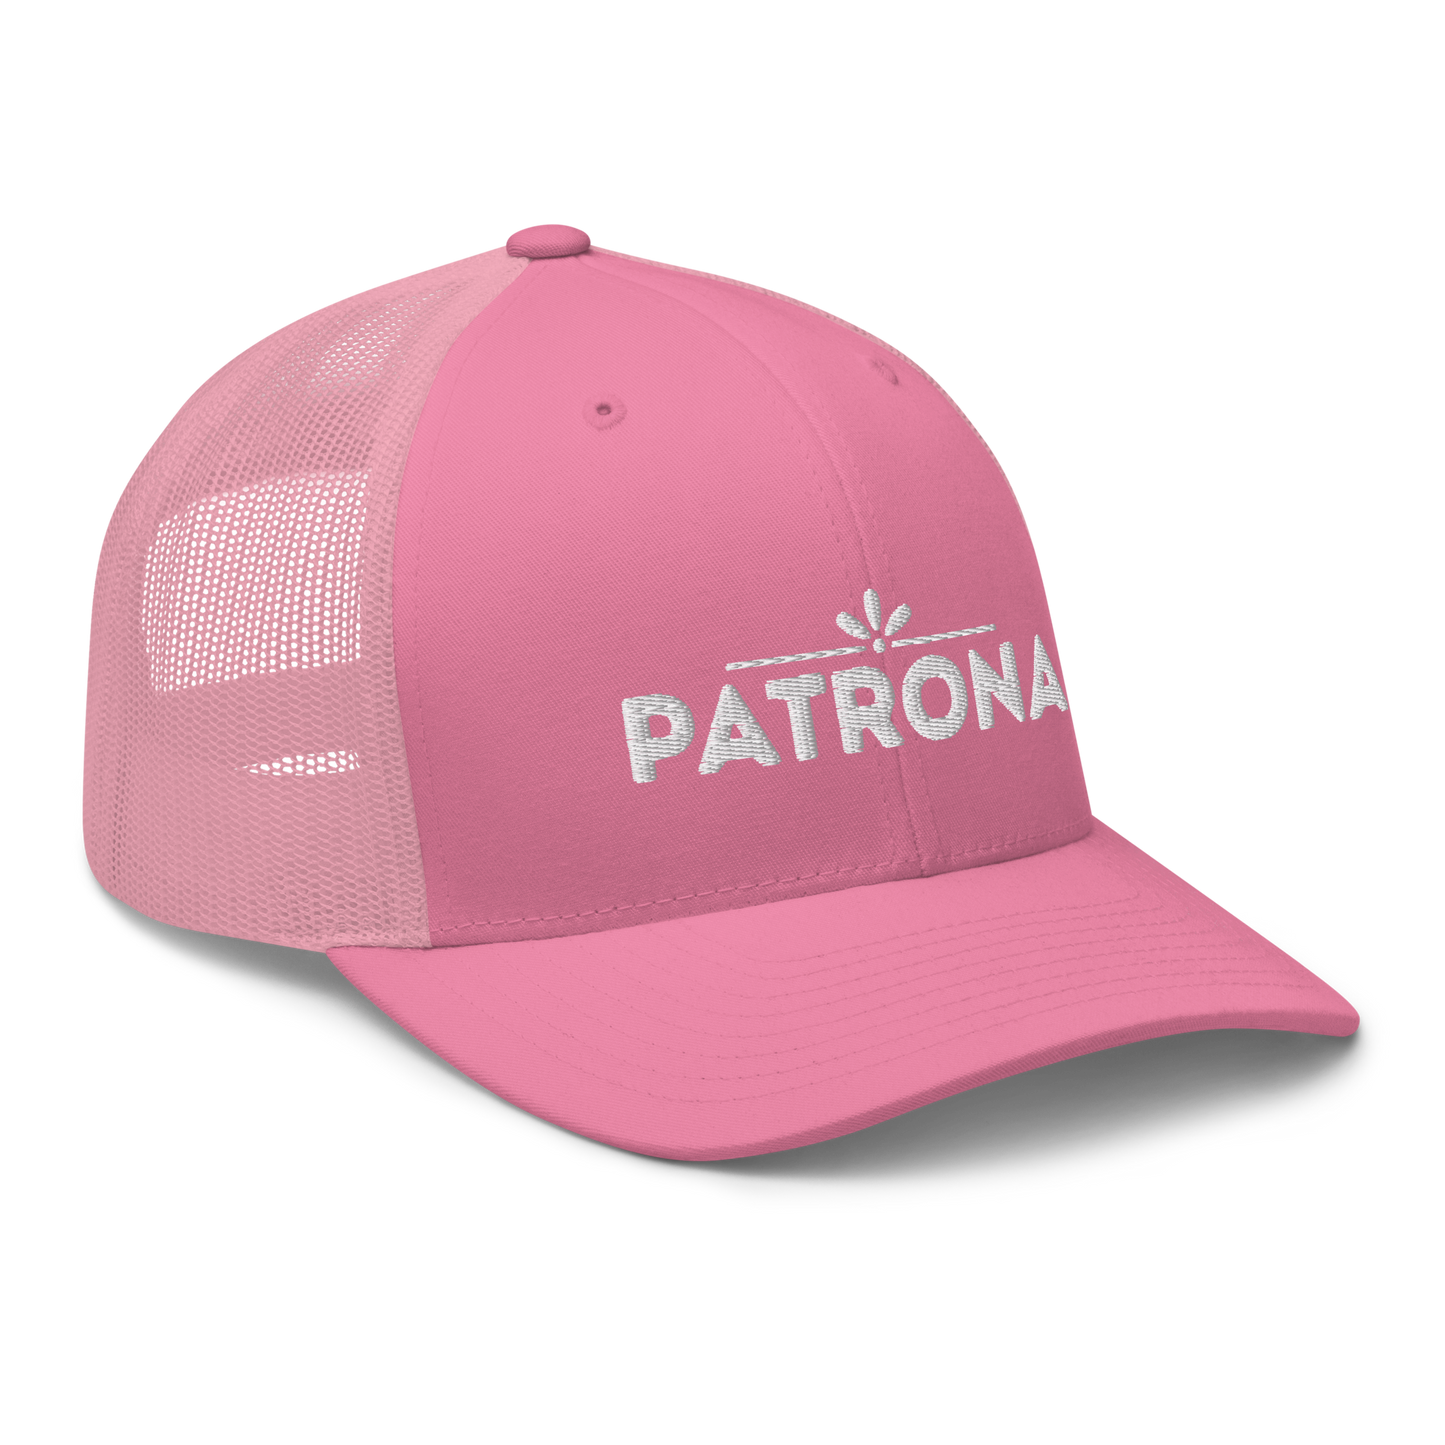 Patrona Mesh Hat